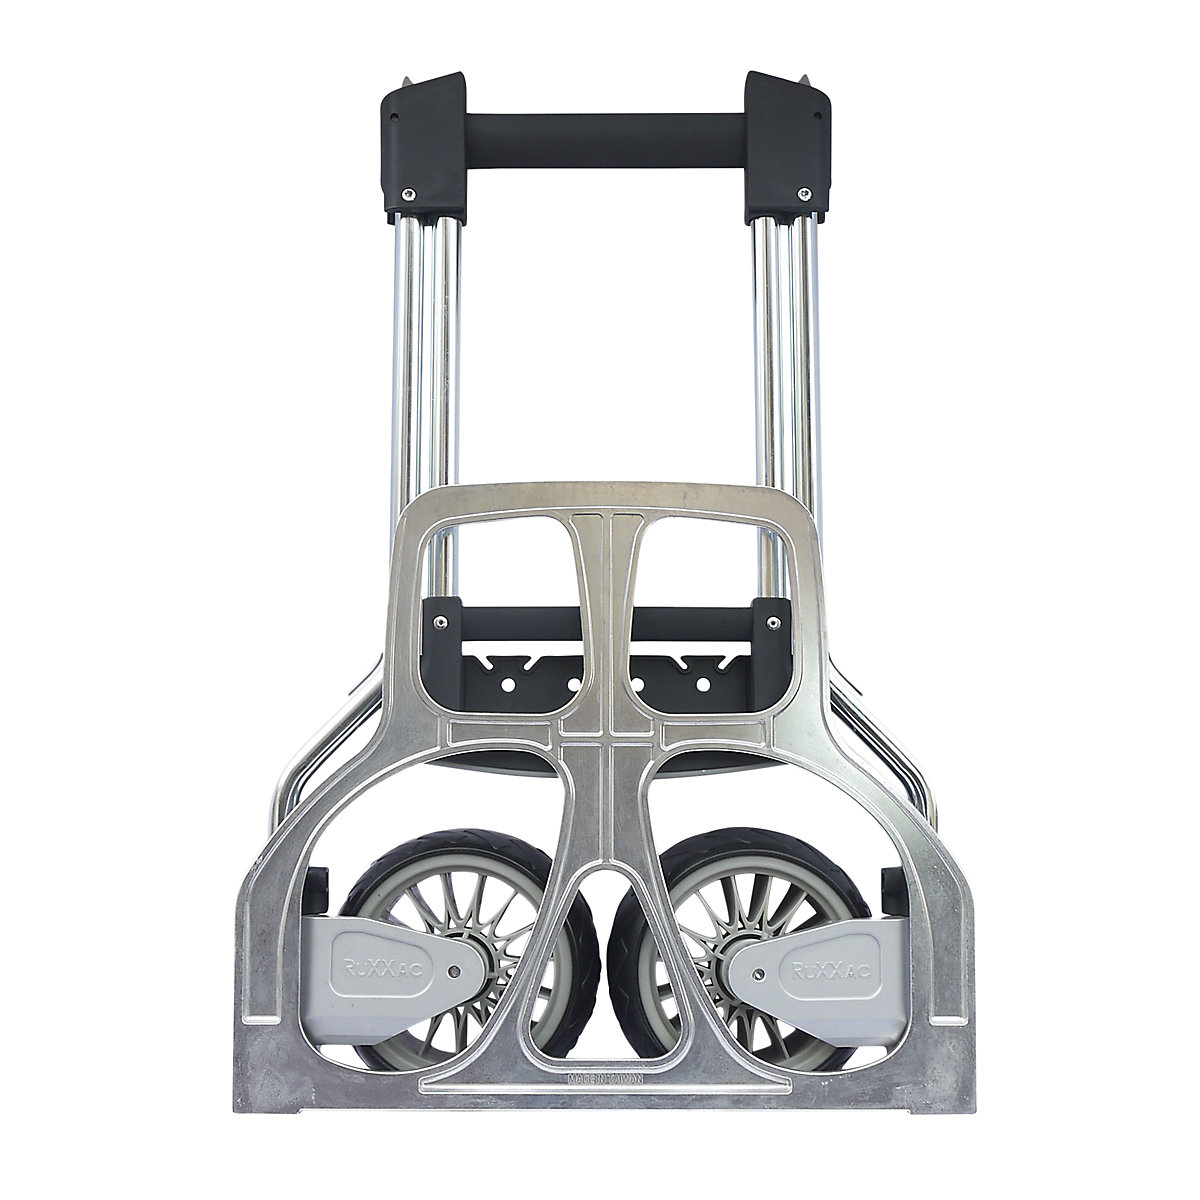 Profesionalna kolica za prijevoz vreća, sklopiva – RuXXac (Prikaz proizvoda 6)-5